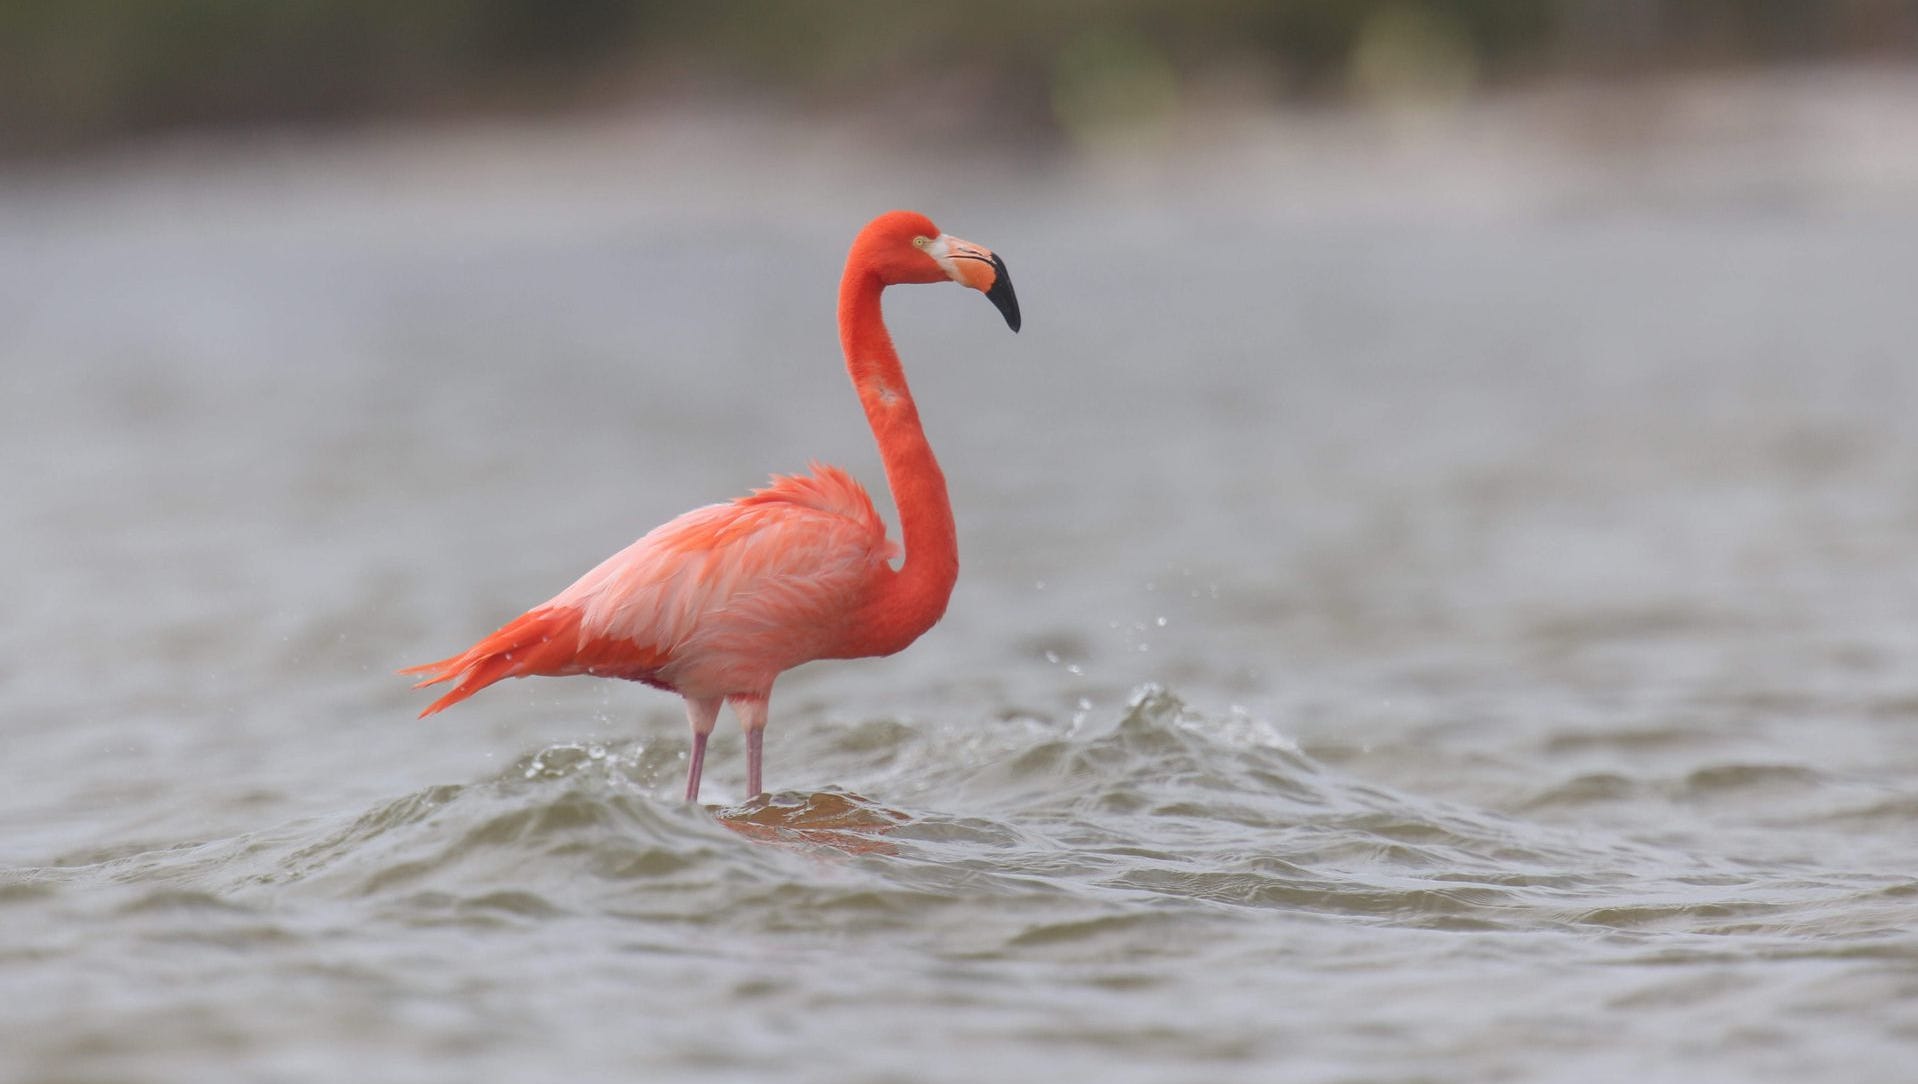 Detail Images Of Flamingo Nomer 38